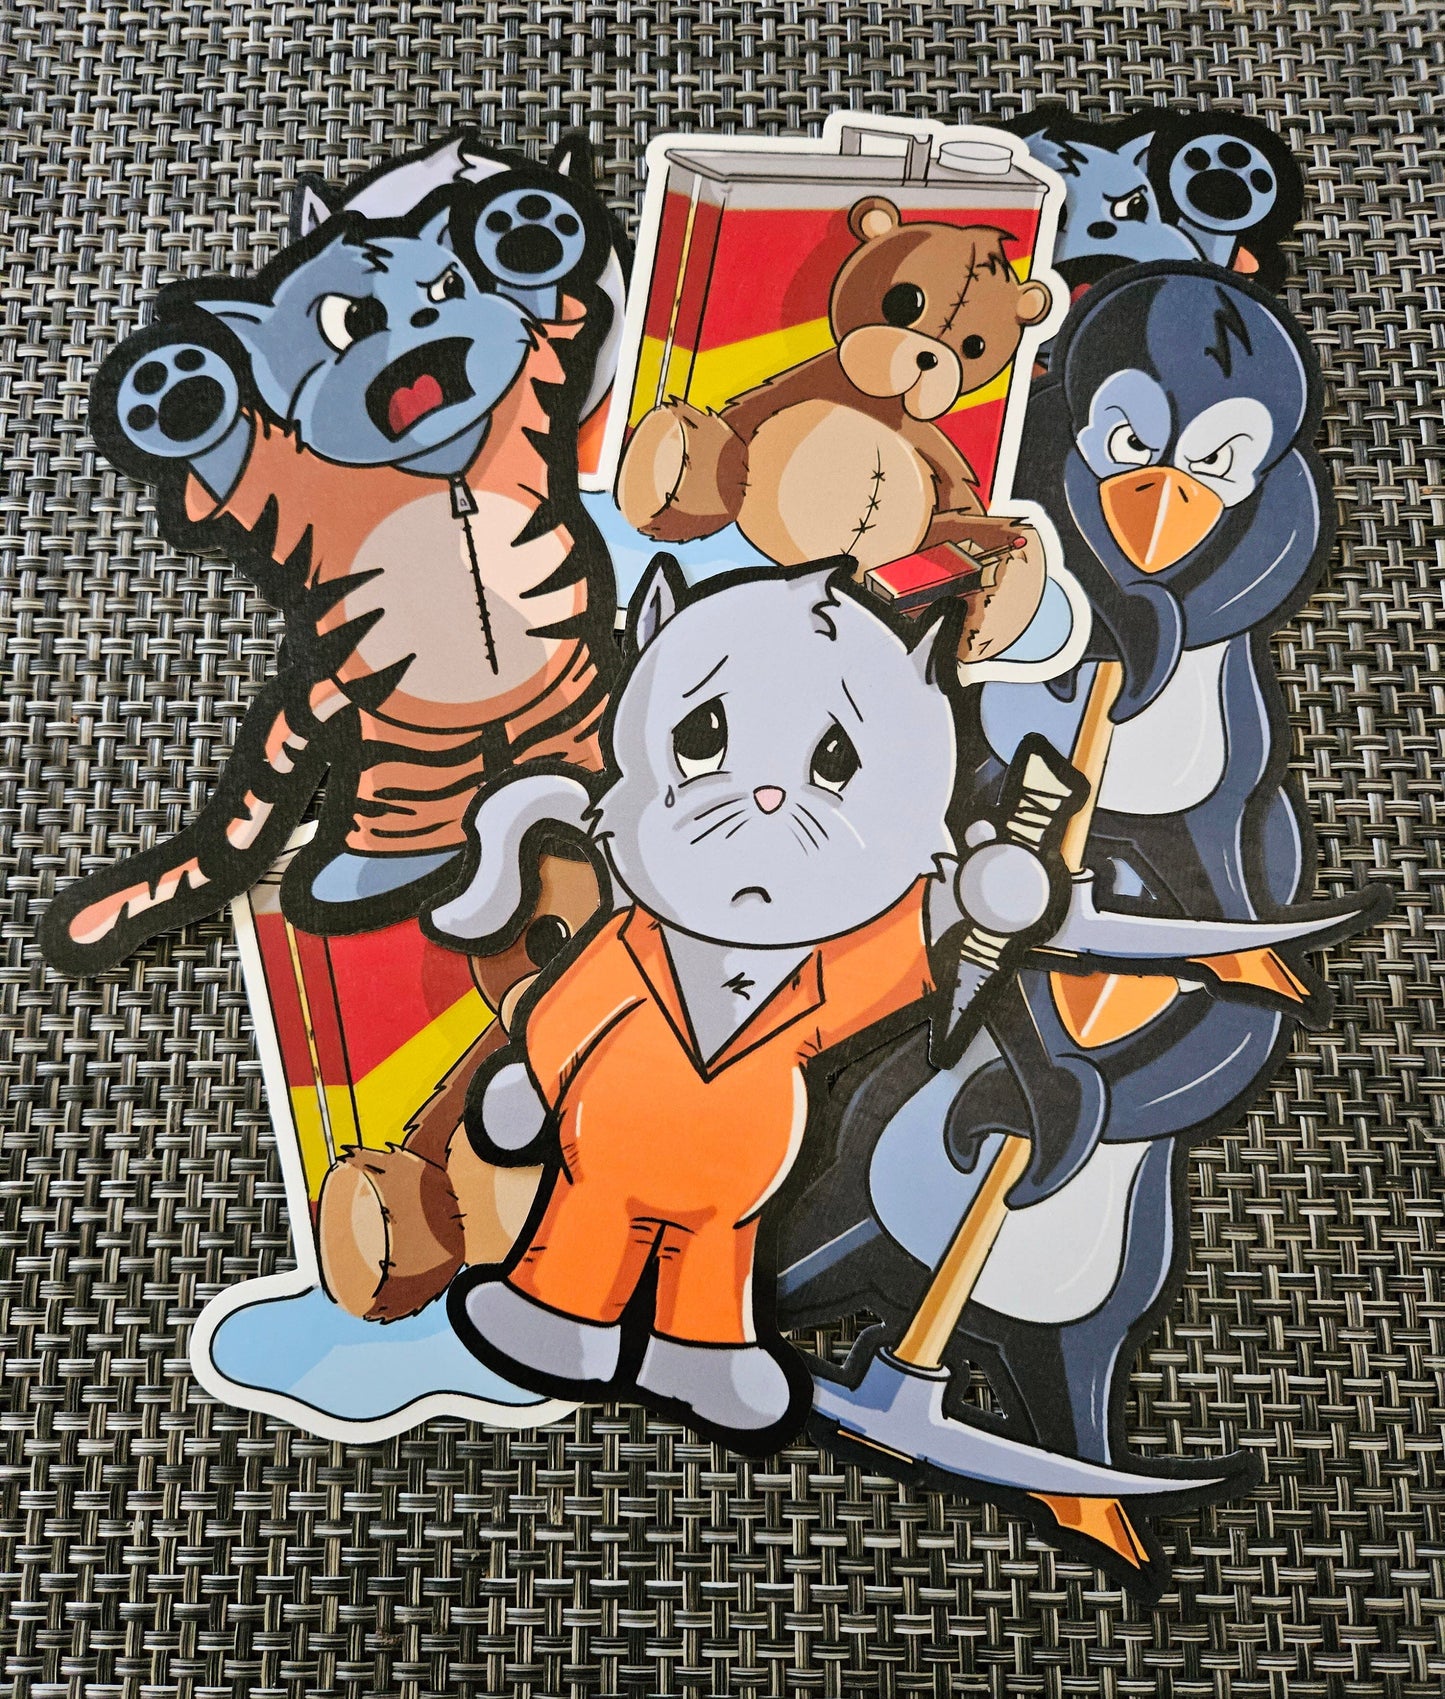 JUMBO Penguin with a Pick Axe sticker sticker DangerBearIndustries 